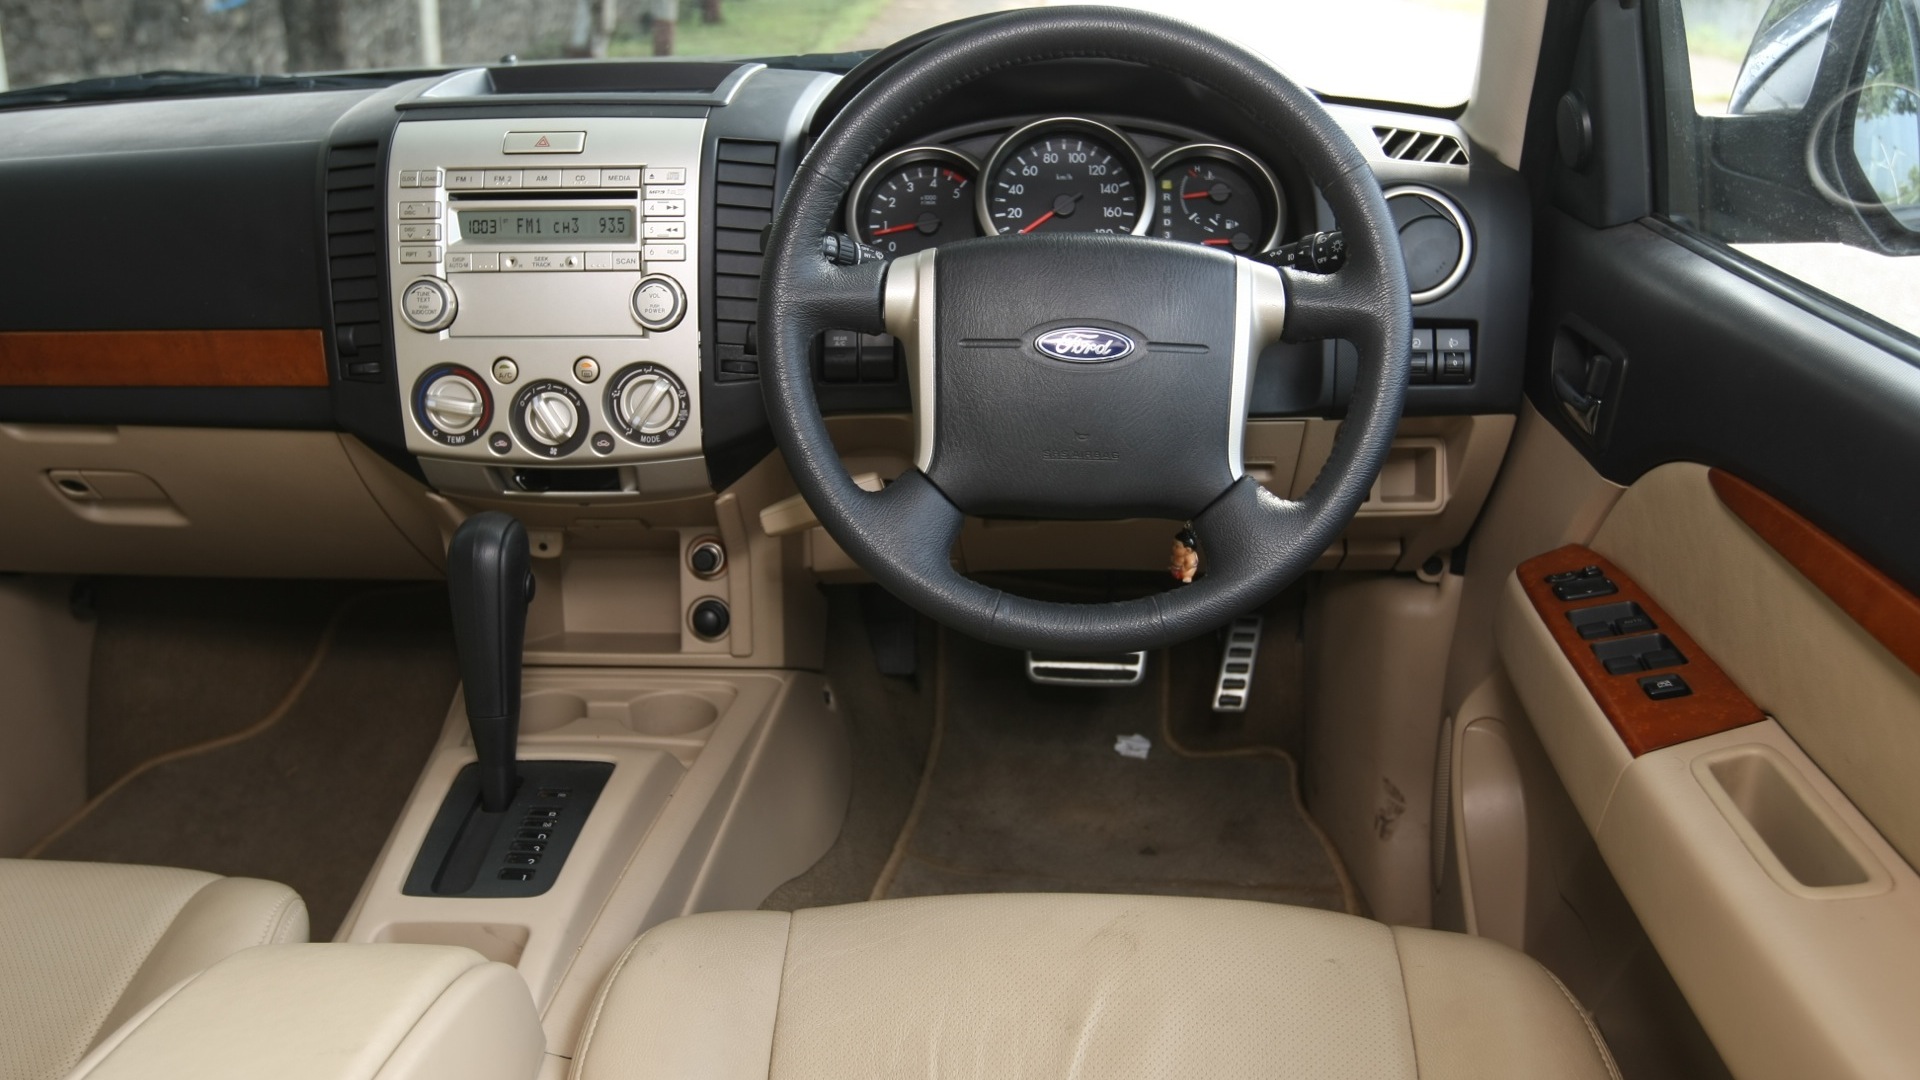 Ford Endeavour 2012 Tdci 4x2 2 5 Xlt Interior Car Photos